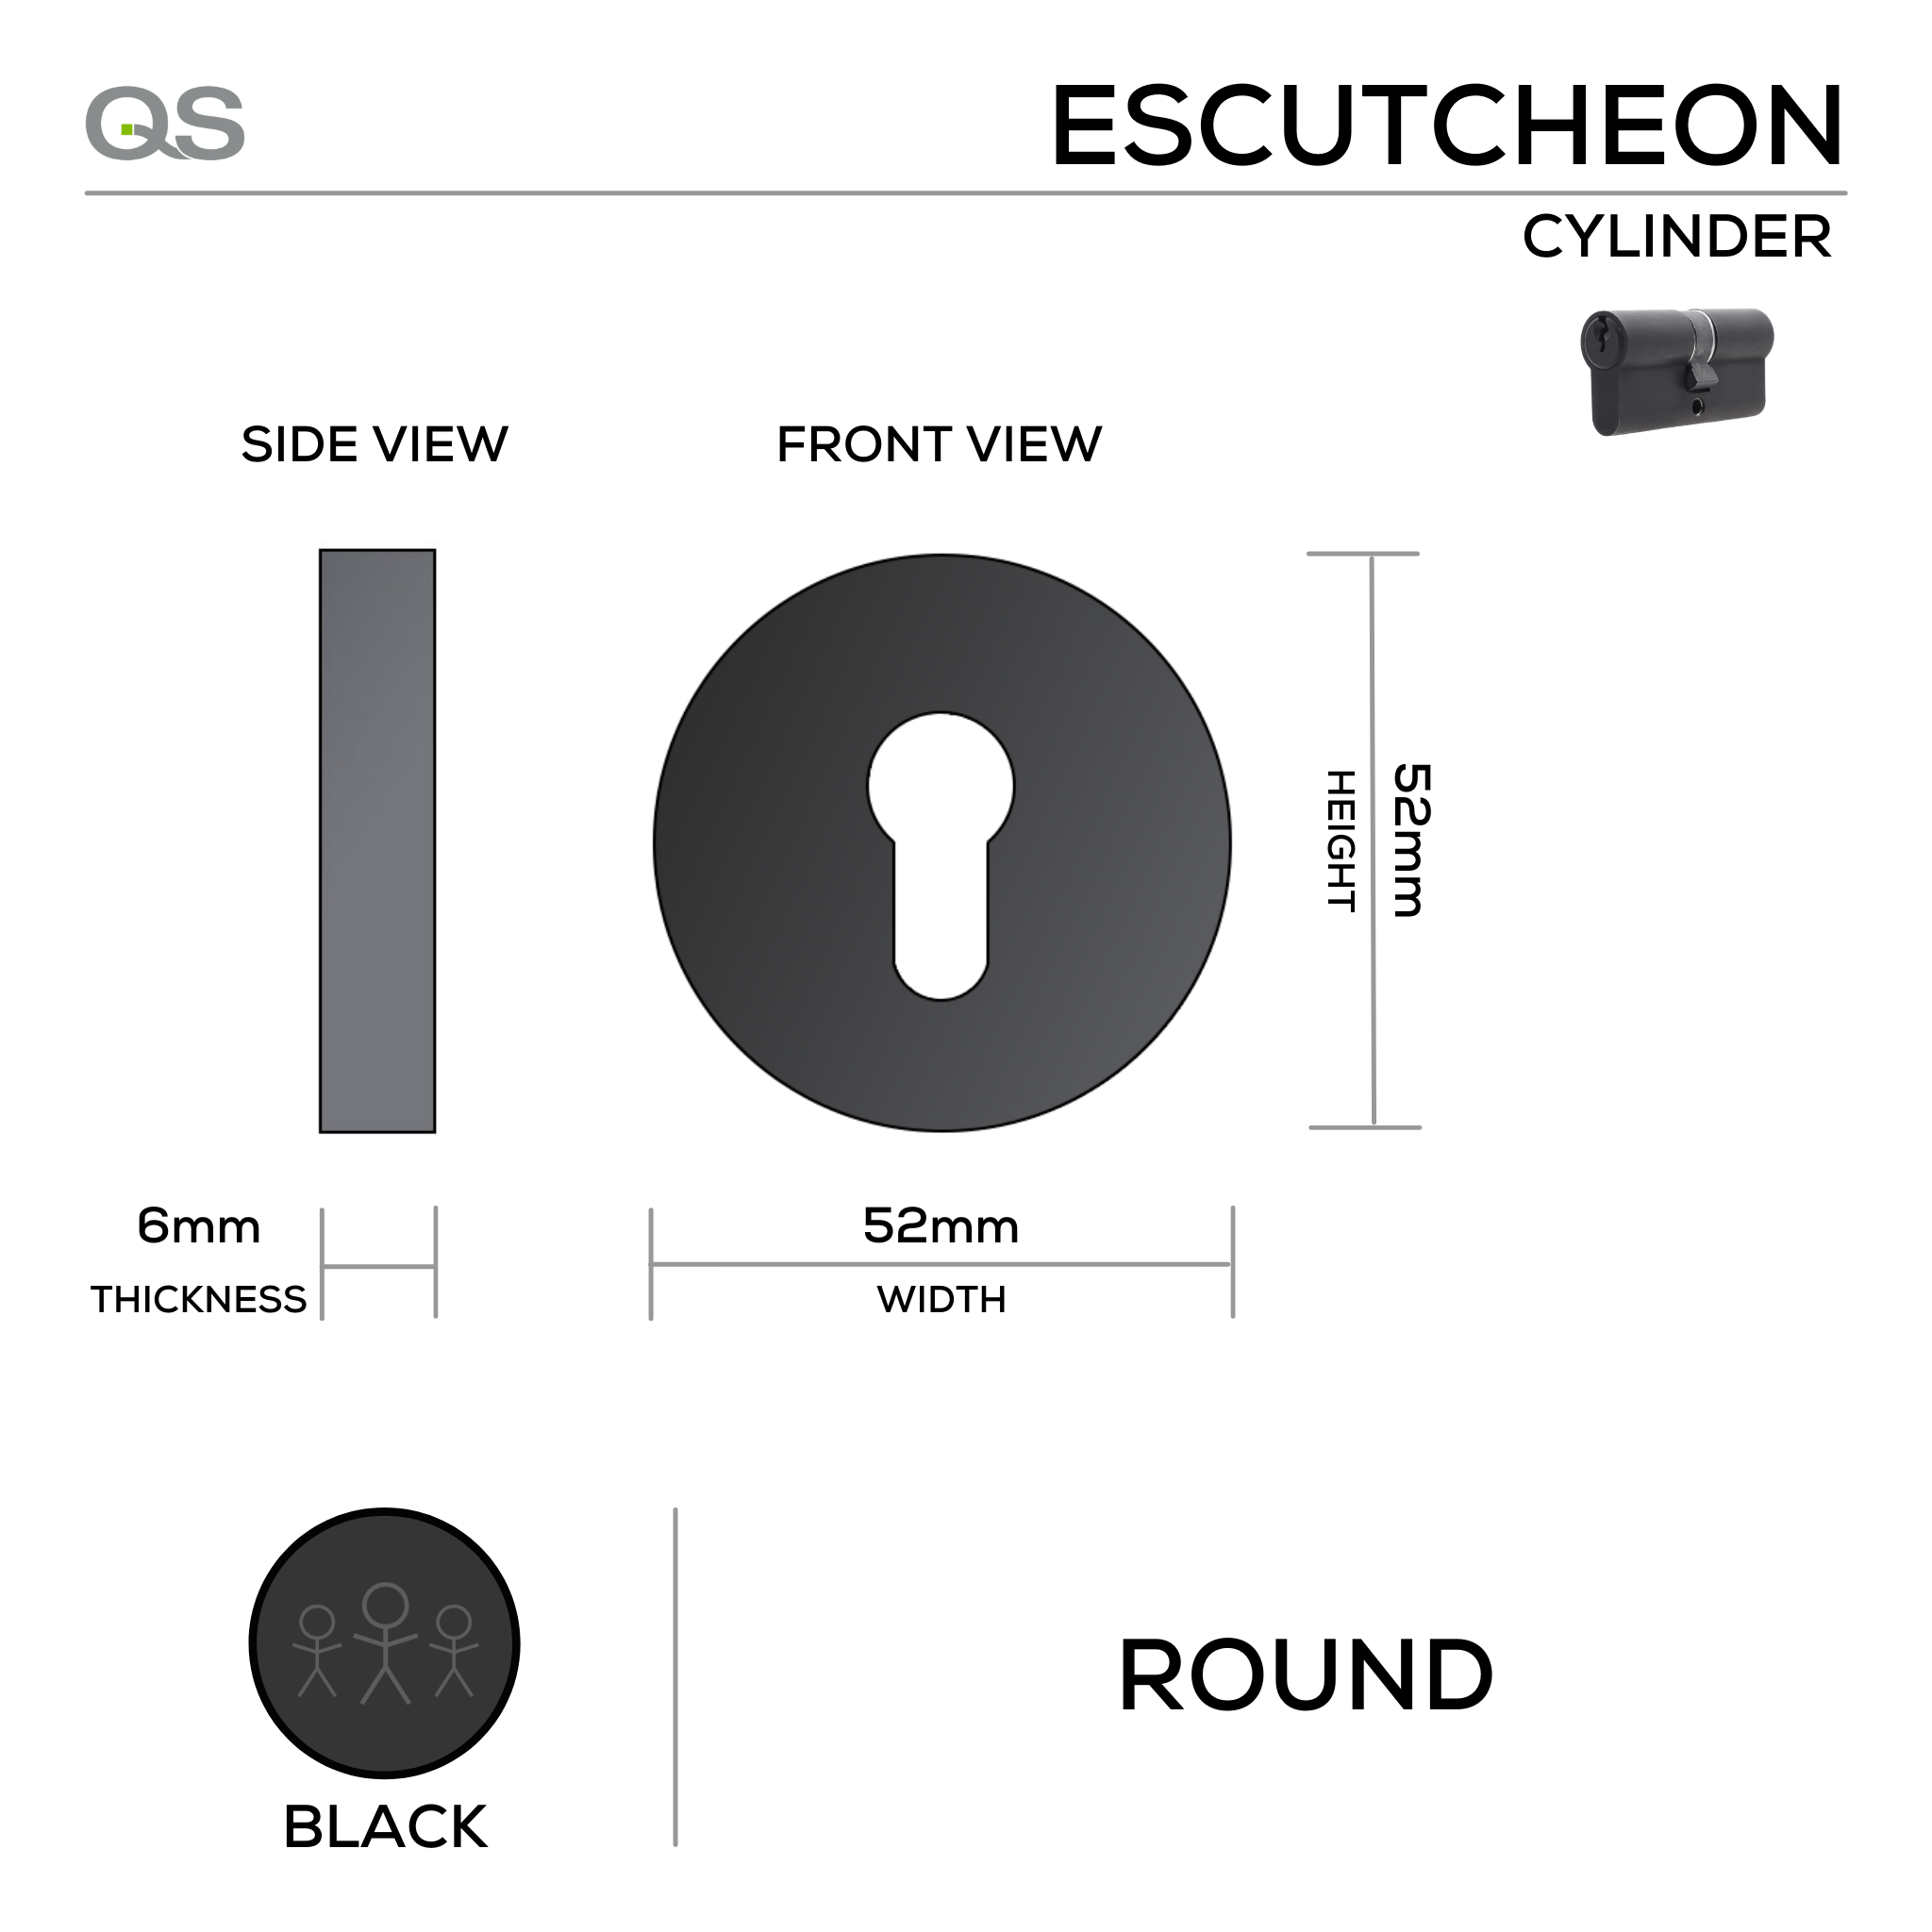 QS4403 BLACK, Cylinder Escutcheon, Round Rose, 52mm (h) x 52mm (w) x 6mm (t), Black, QS